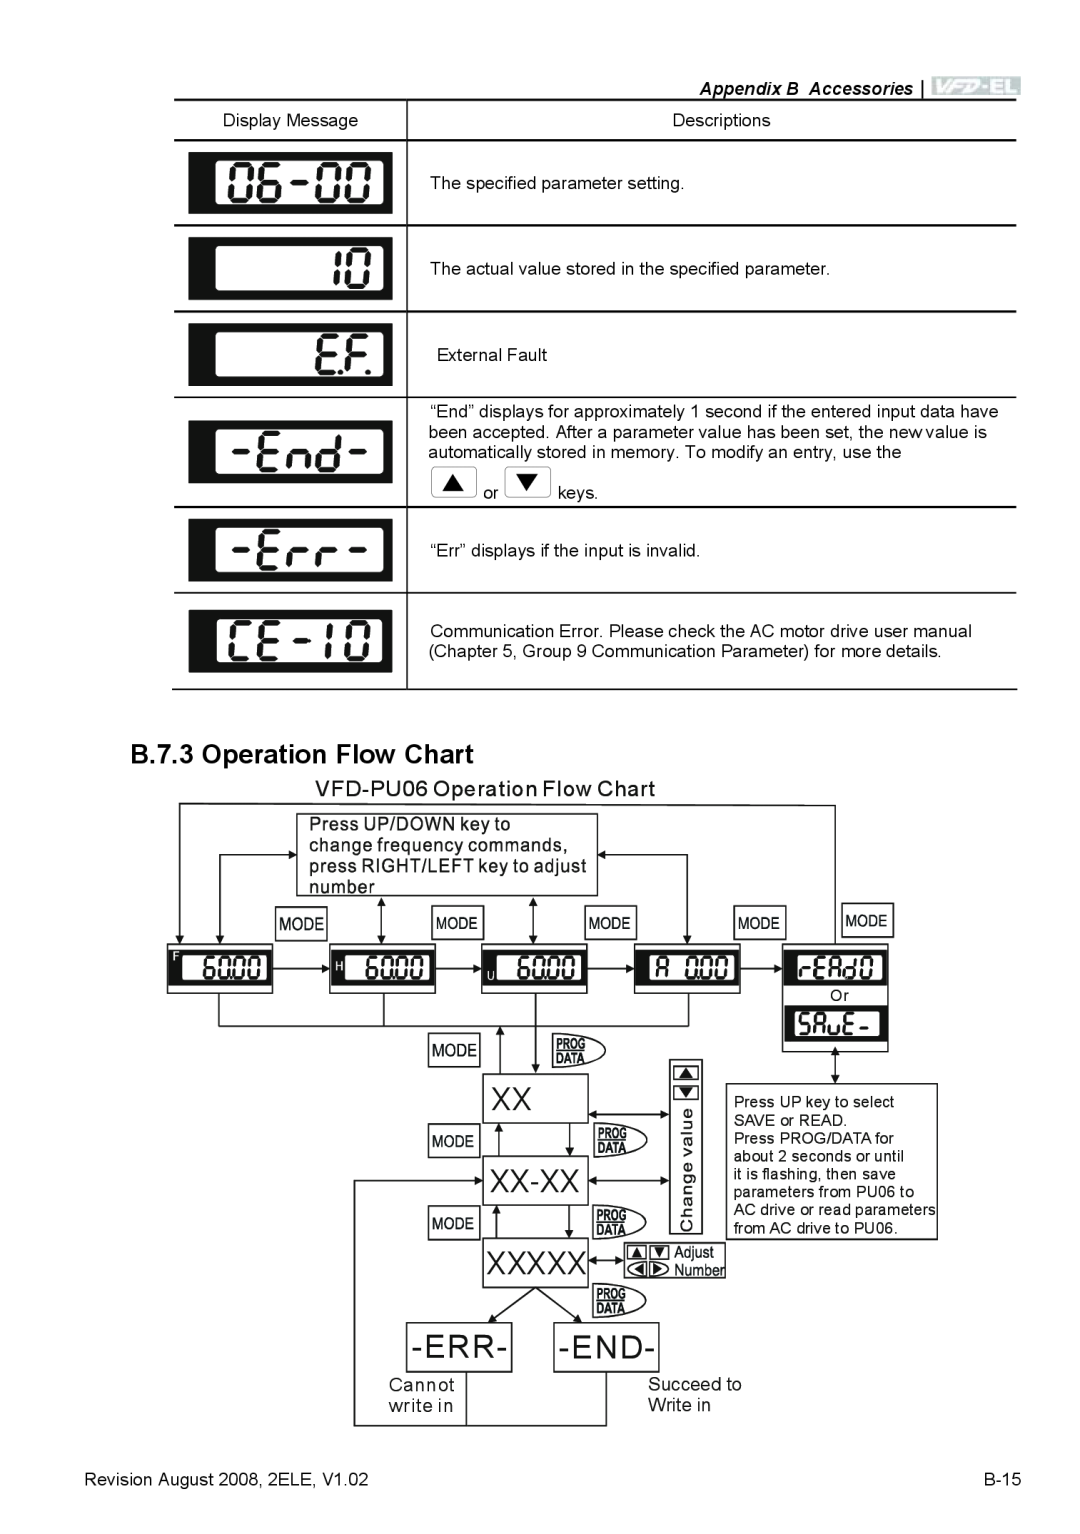 Delta Electronics VFD-EL manual B.7.3 Operation Flow Chart, Xx-Xx, Xxxxx -Err- -End, Appendix B Accessories 